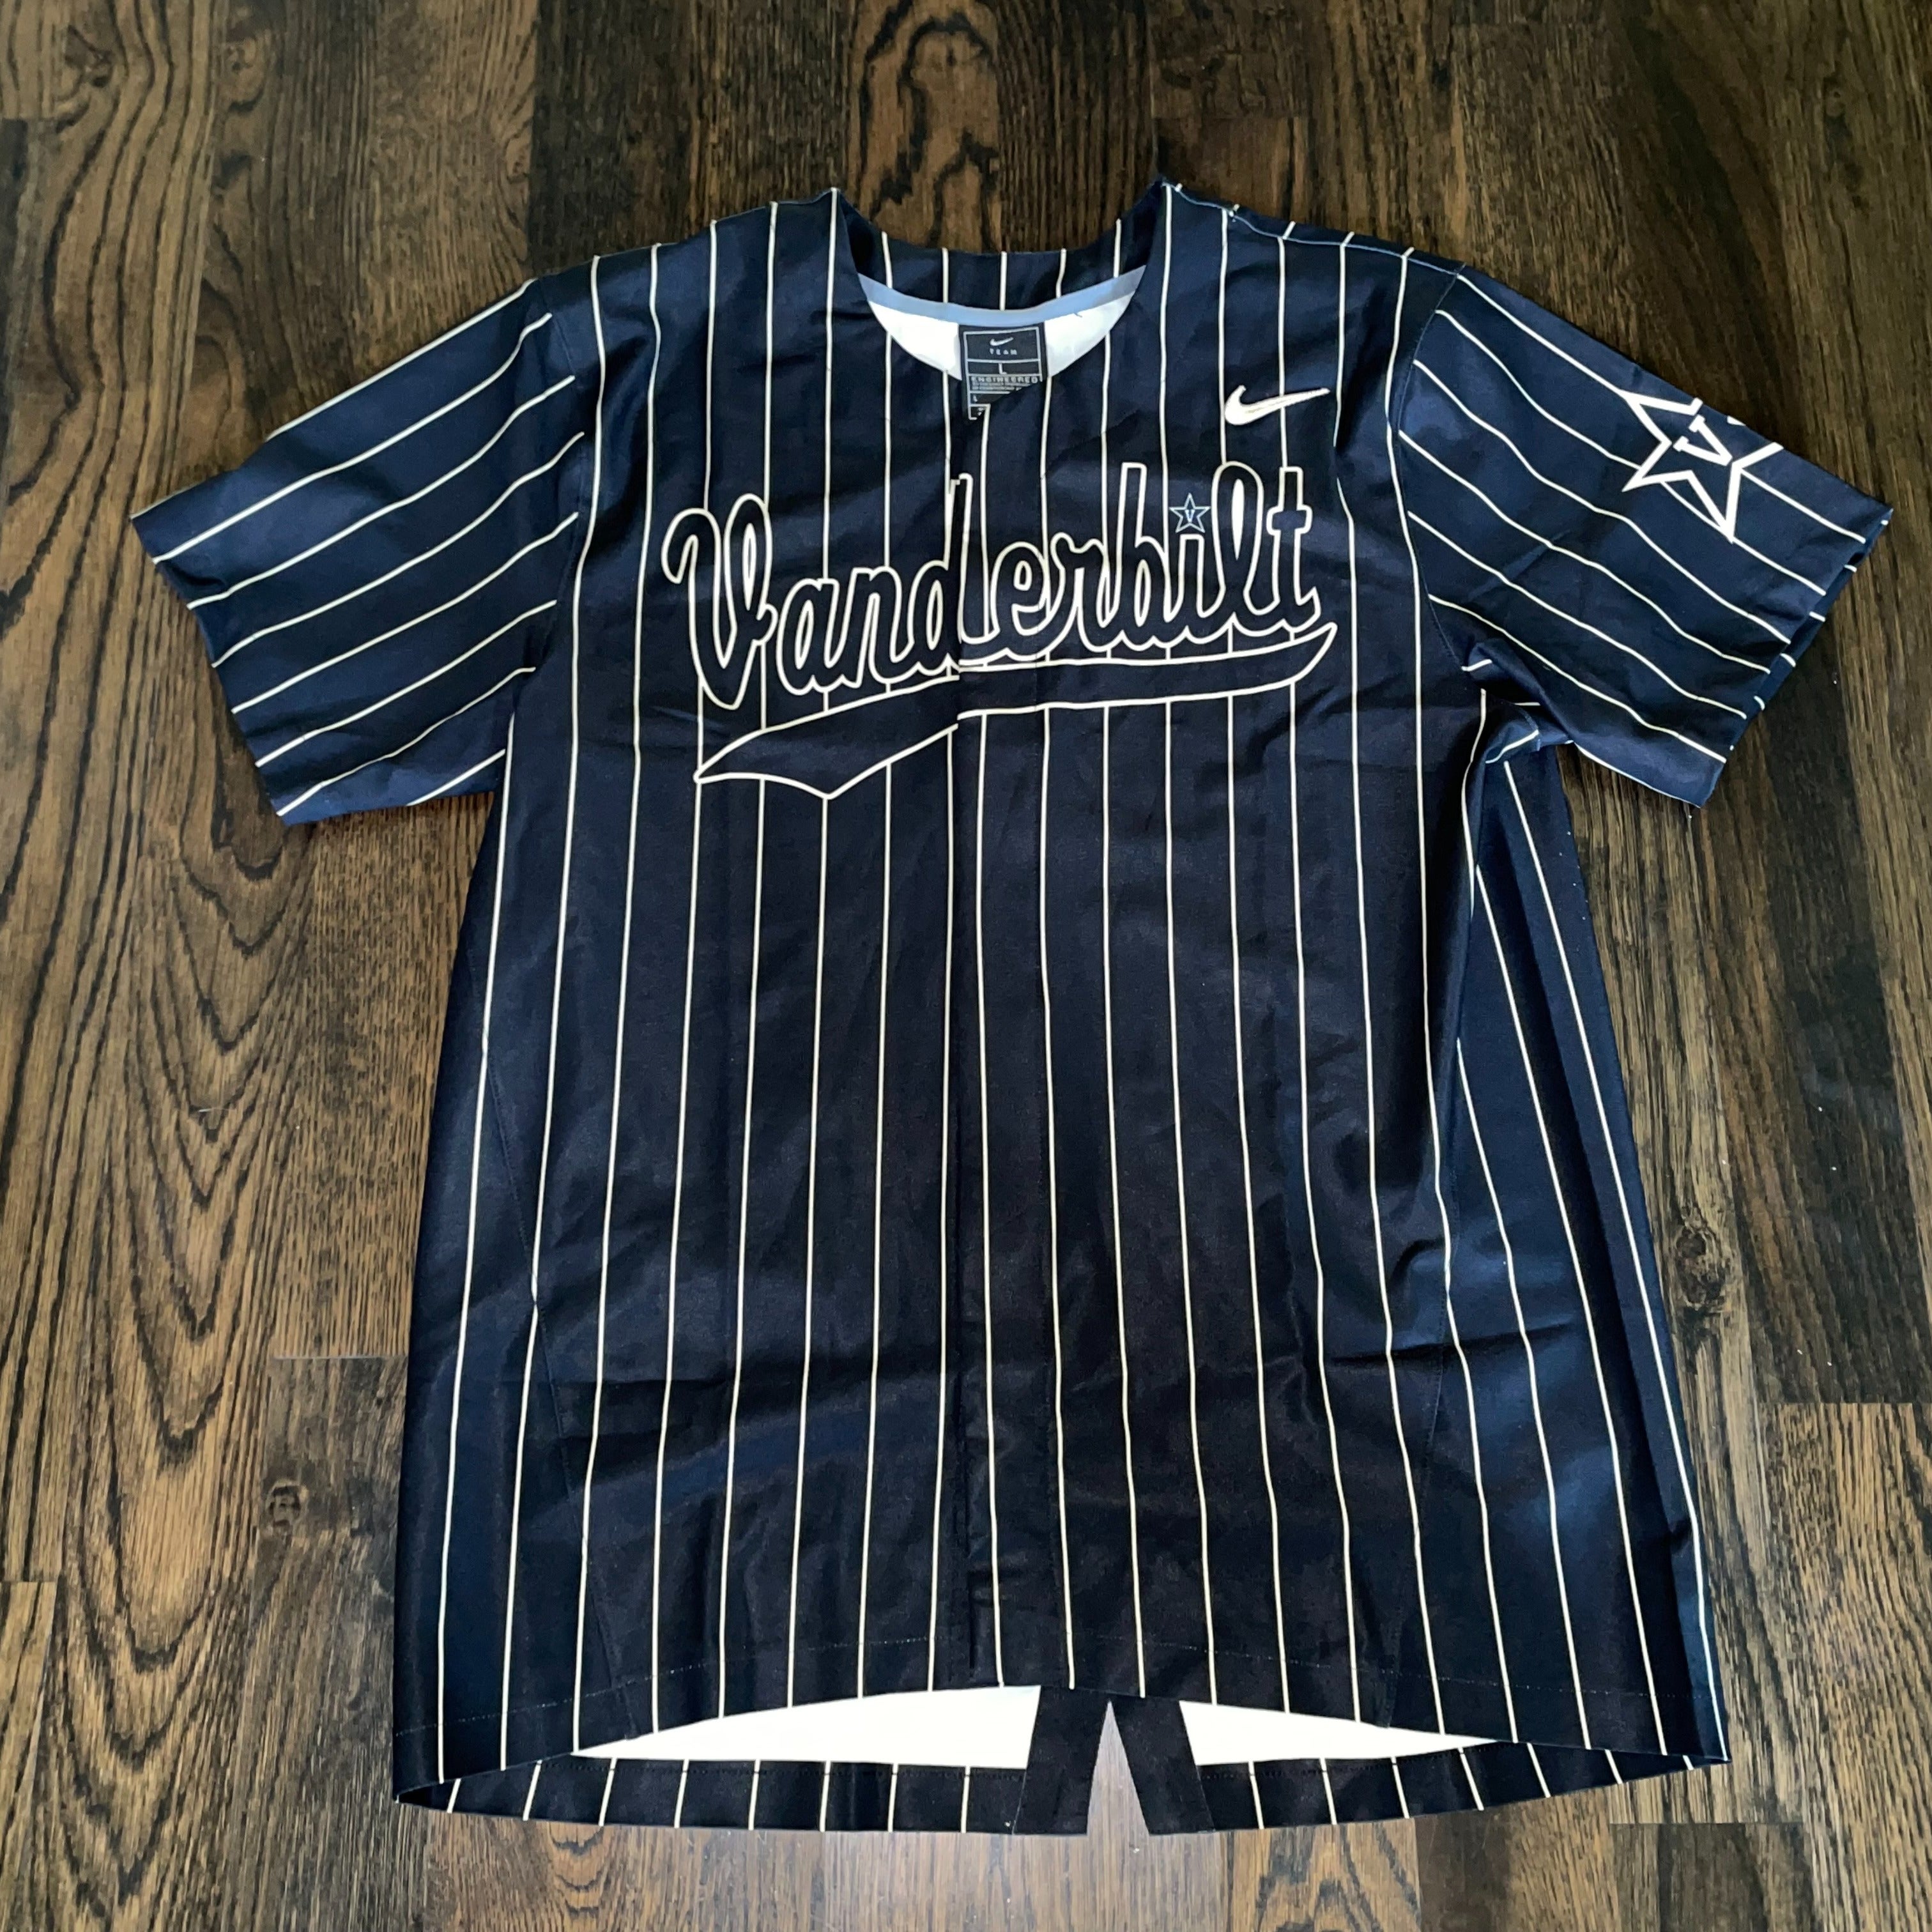 Nike Vanderbilt University Baseball Jersey